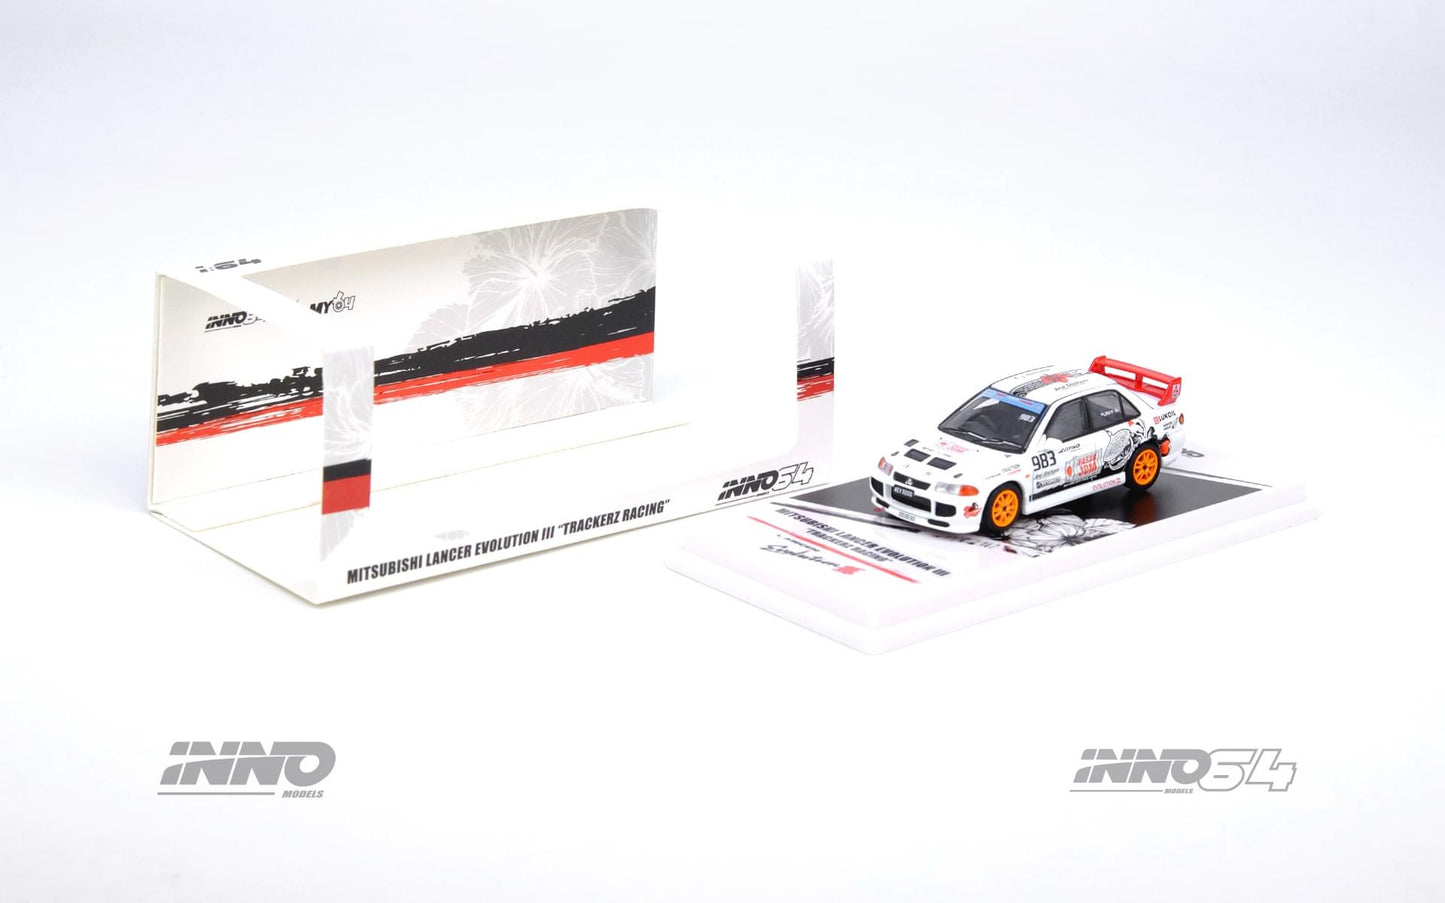 Inno64 1:64 Mitsubishi Lancer Evolution III “Trackerz Racing” - White